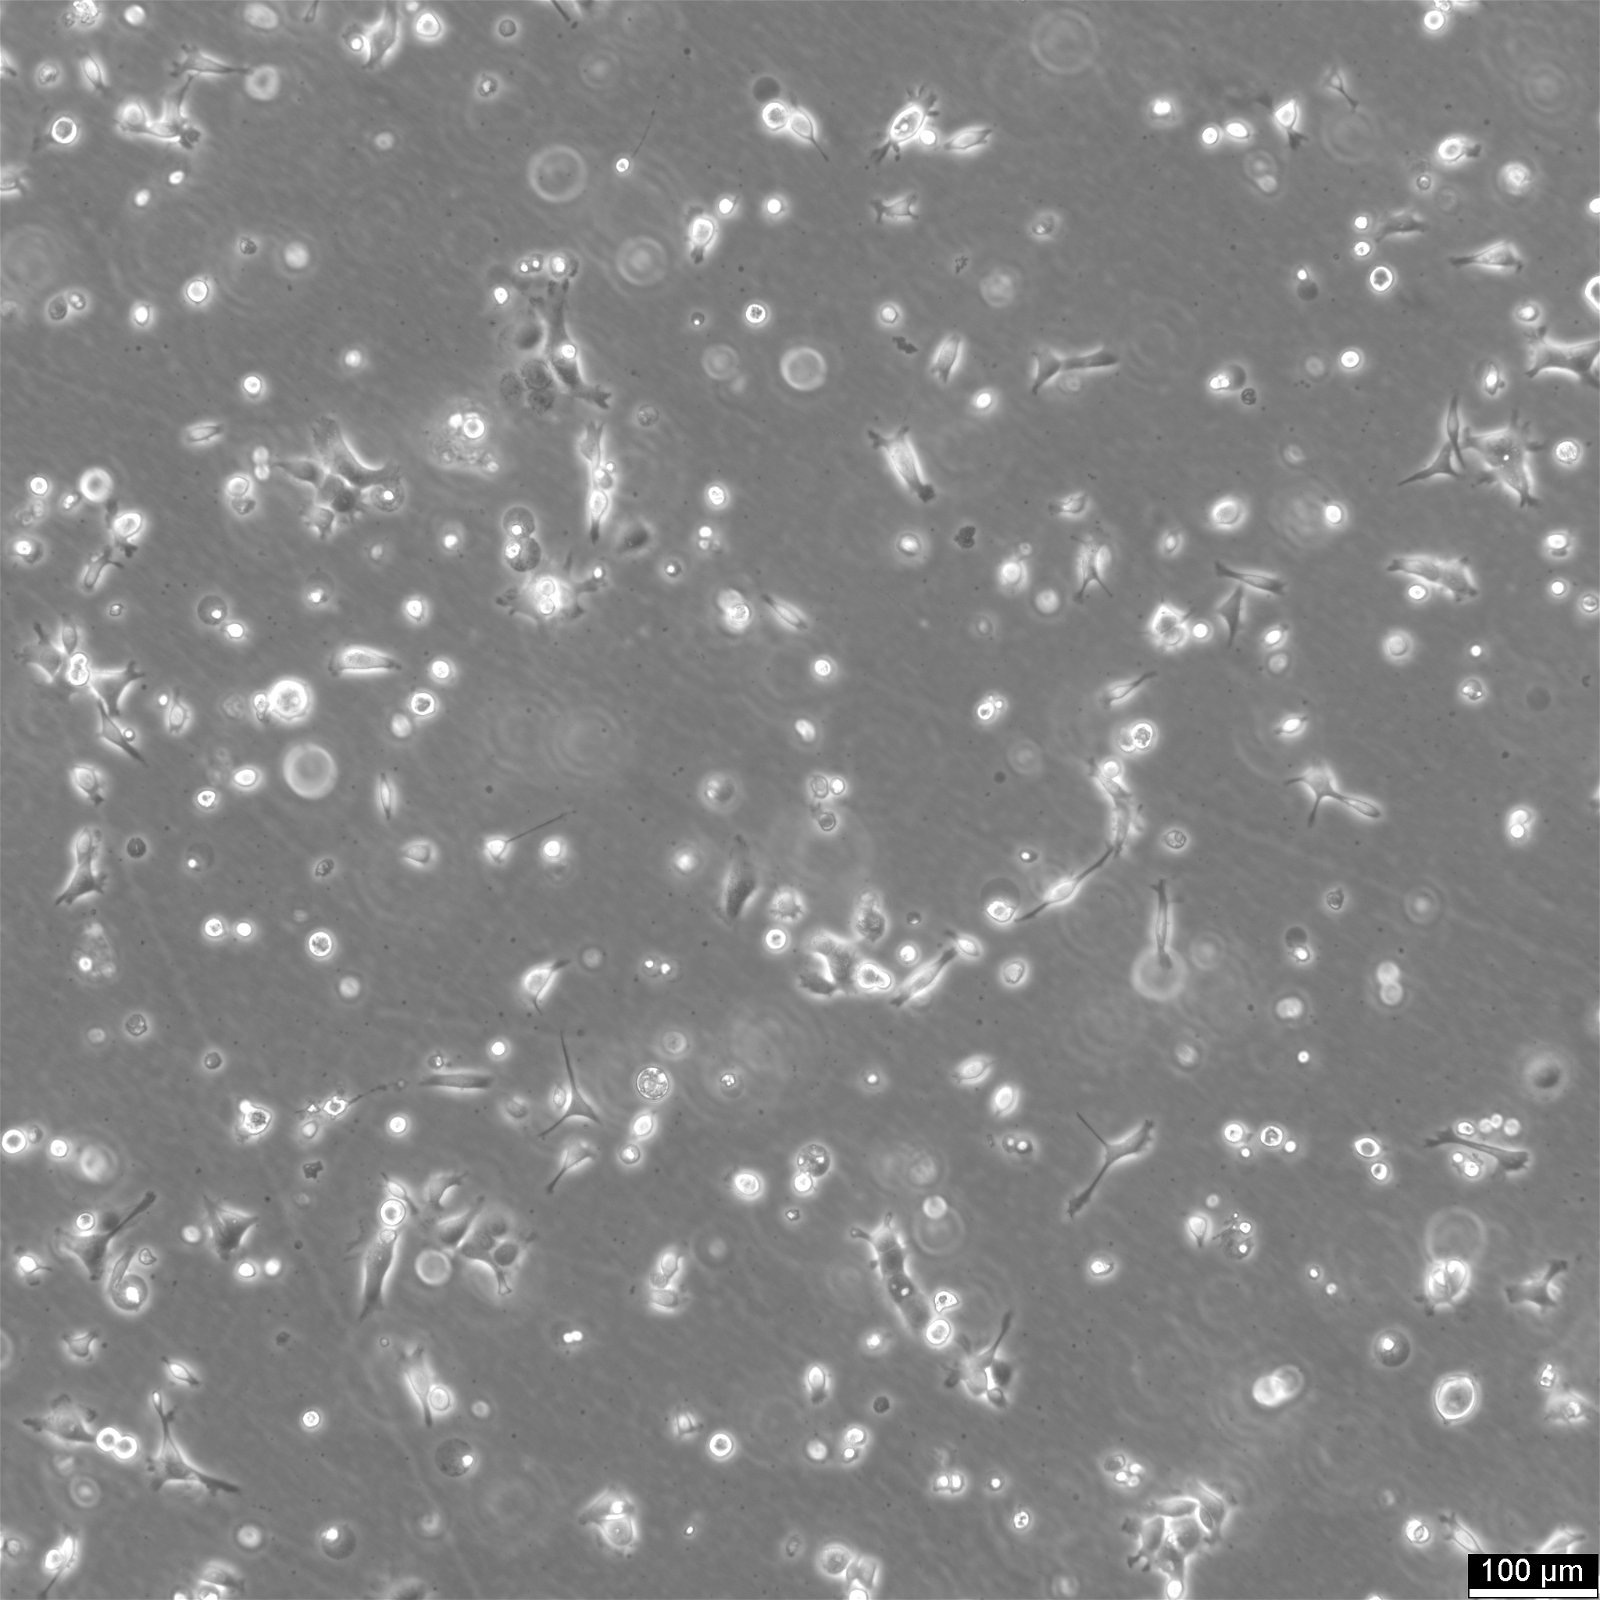 NCI-H1568 Cells